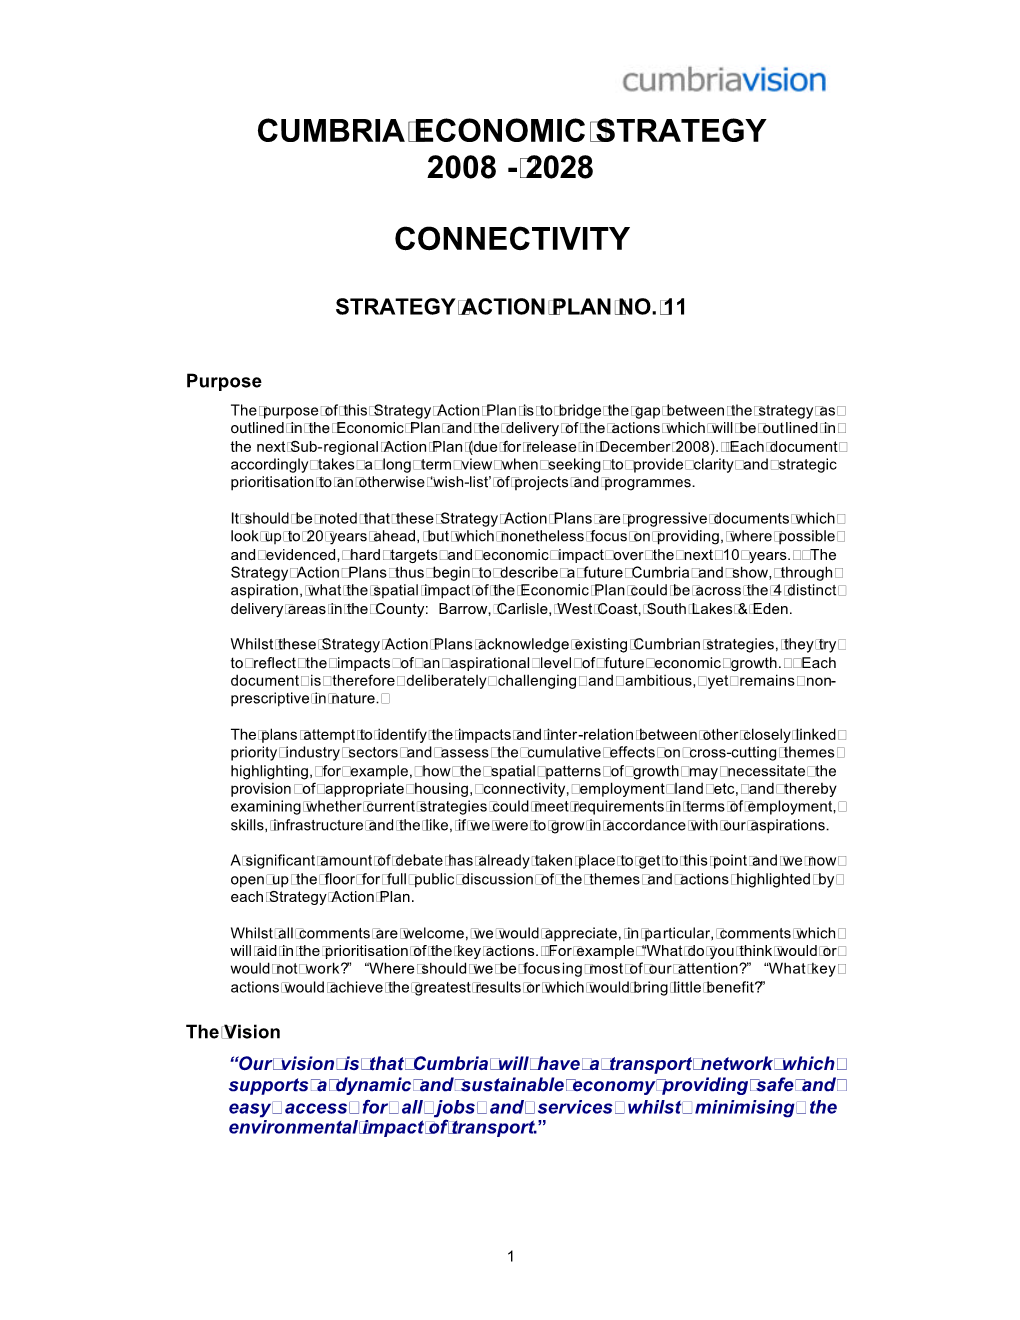 Cumbria Economic Strategy 2008- 2028 Connectivity